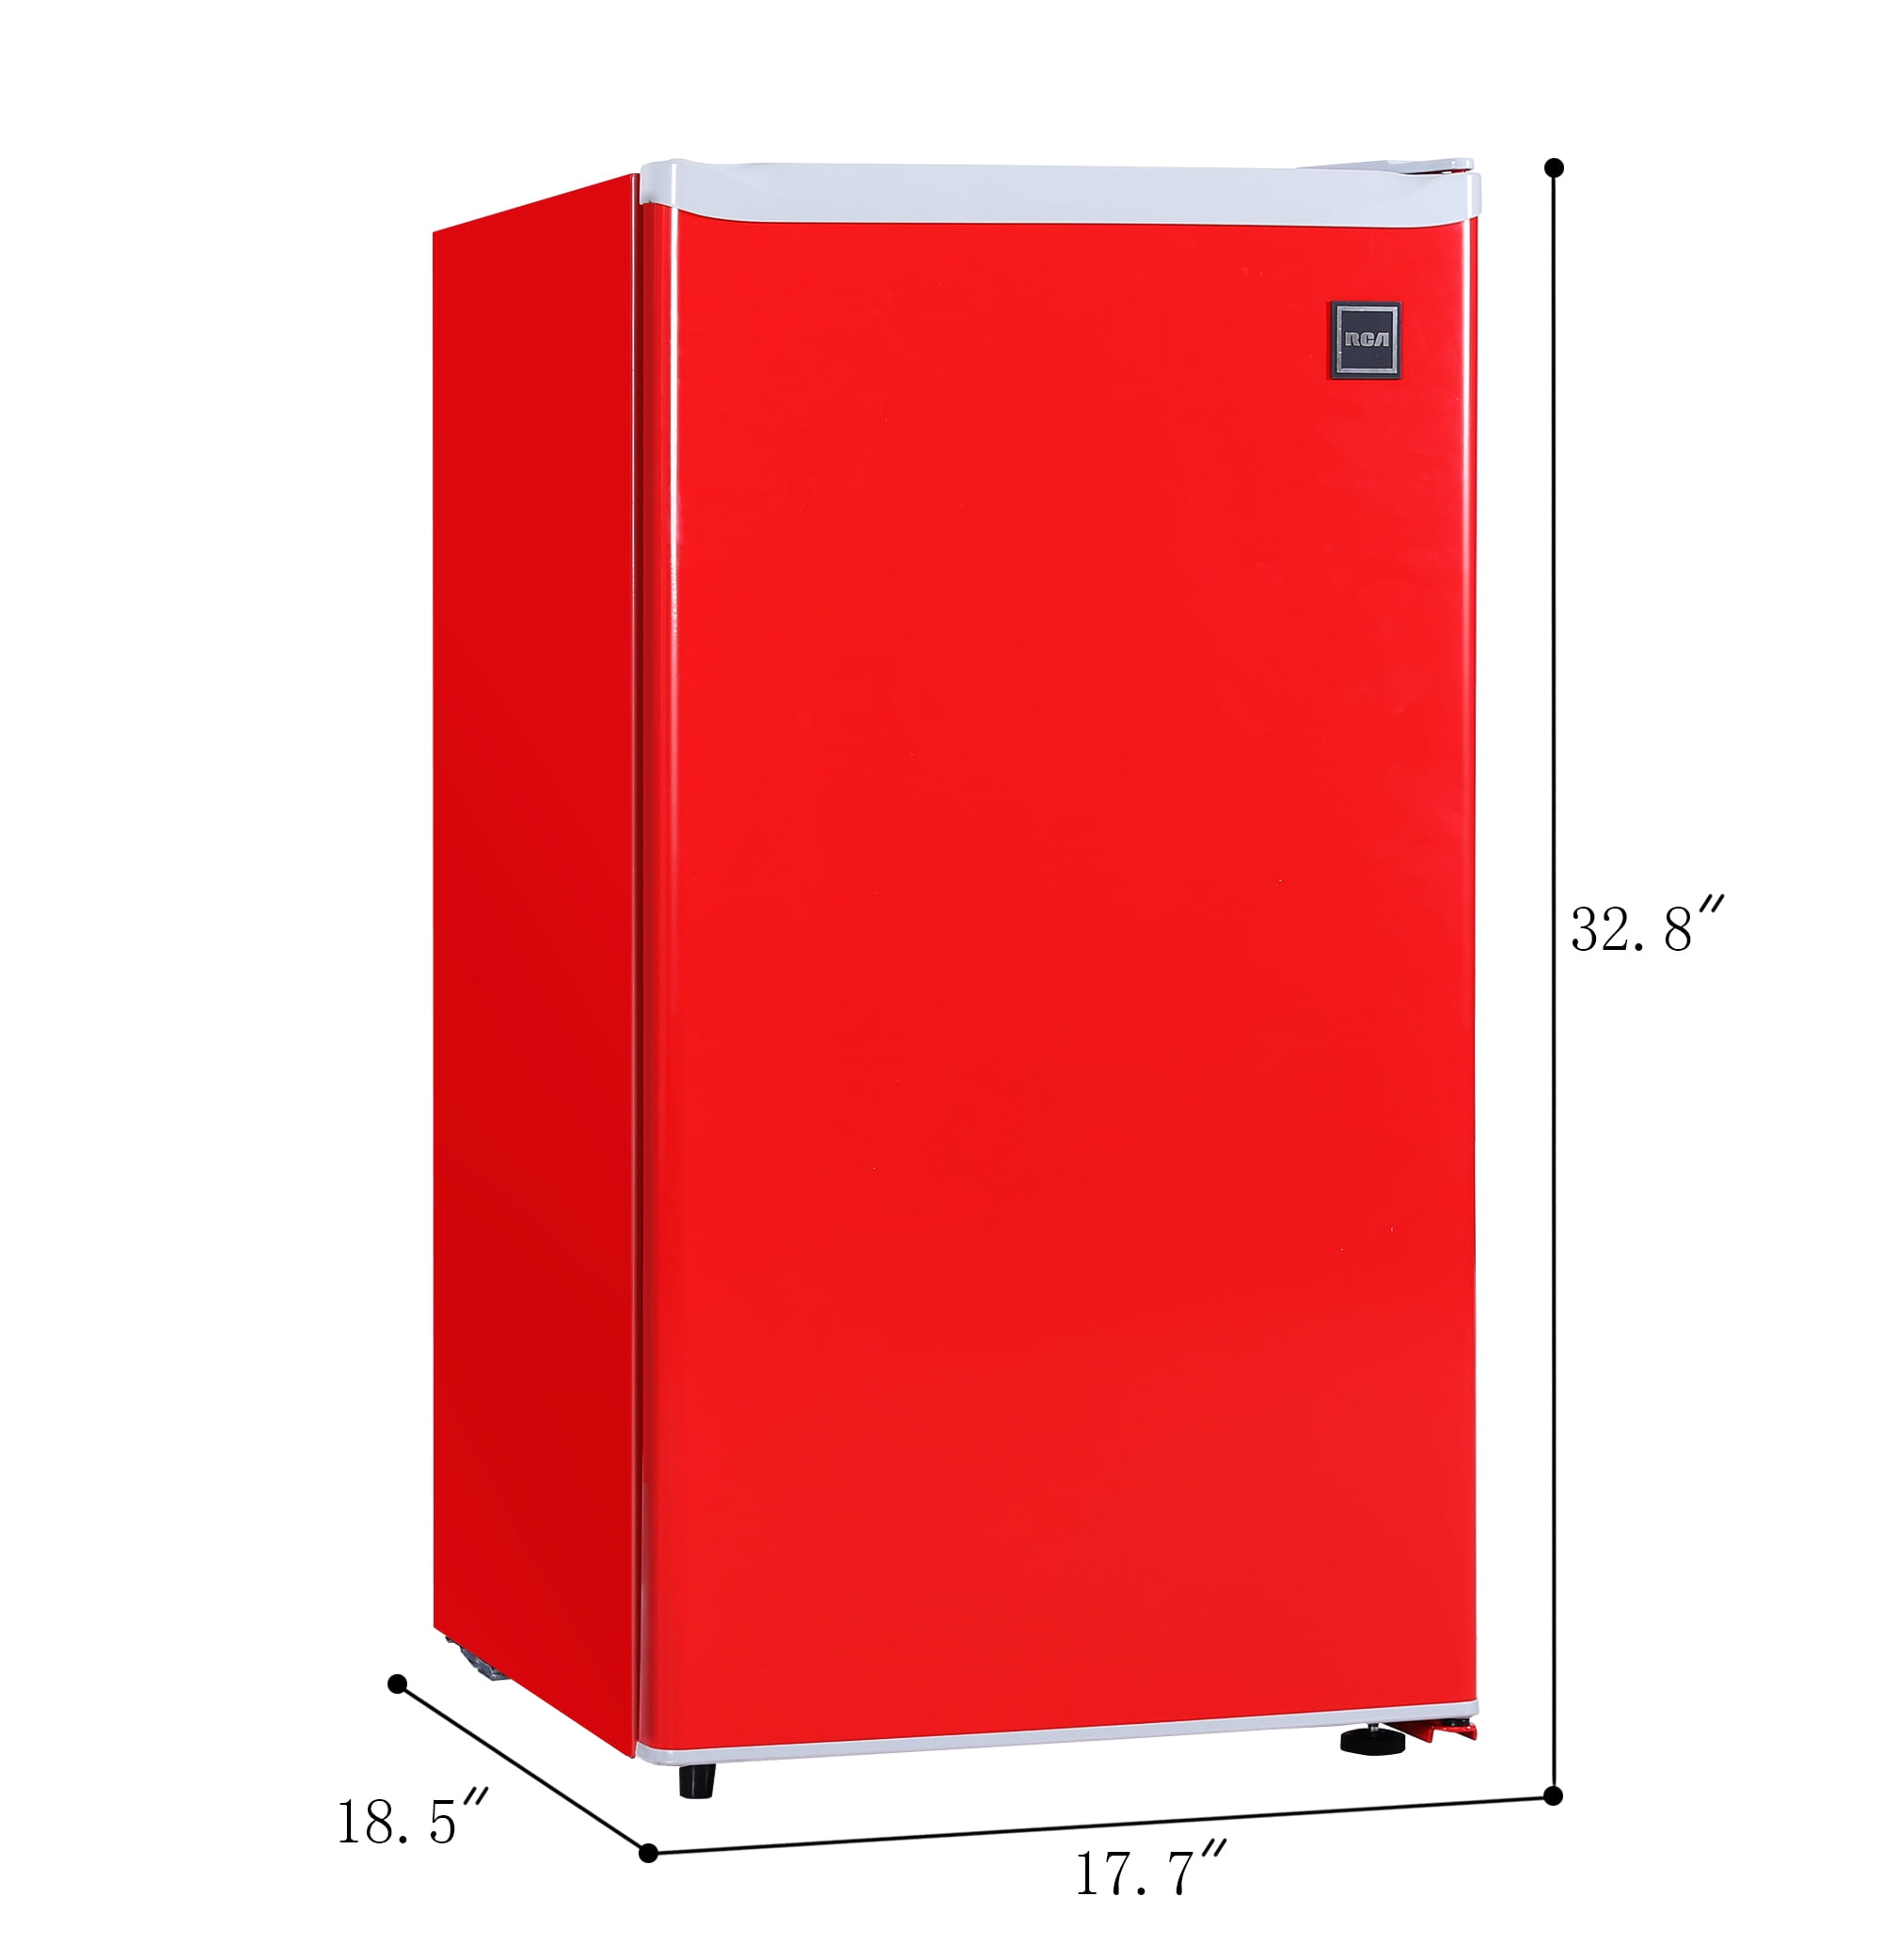 RCA 3.2 Cu. Ft. Single Door Compact Refrigerator RFR320, Blue - Walmart.com